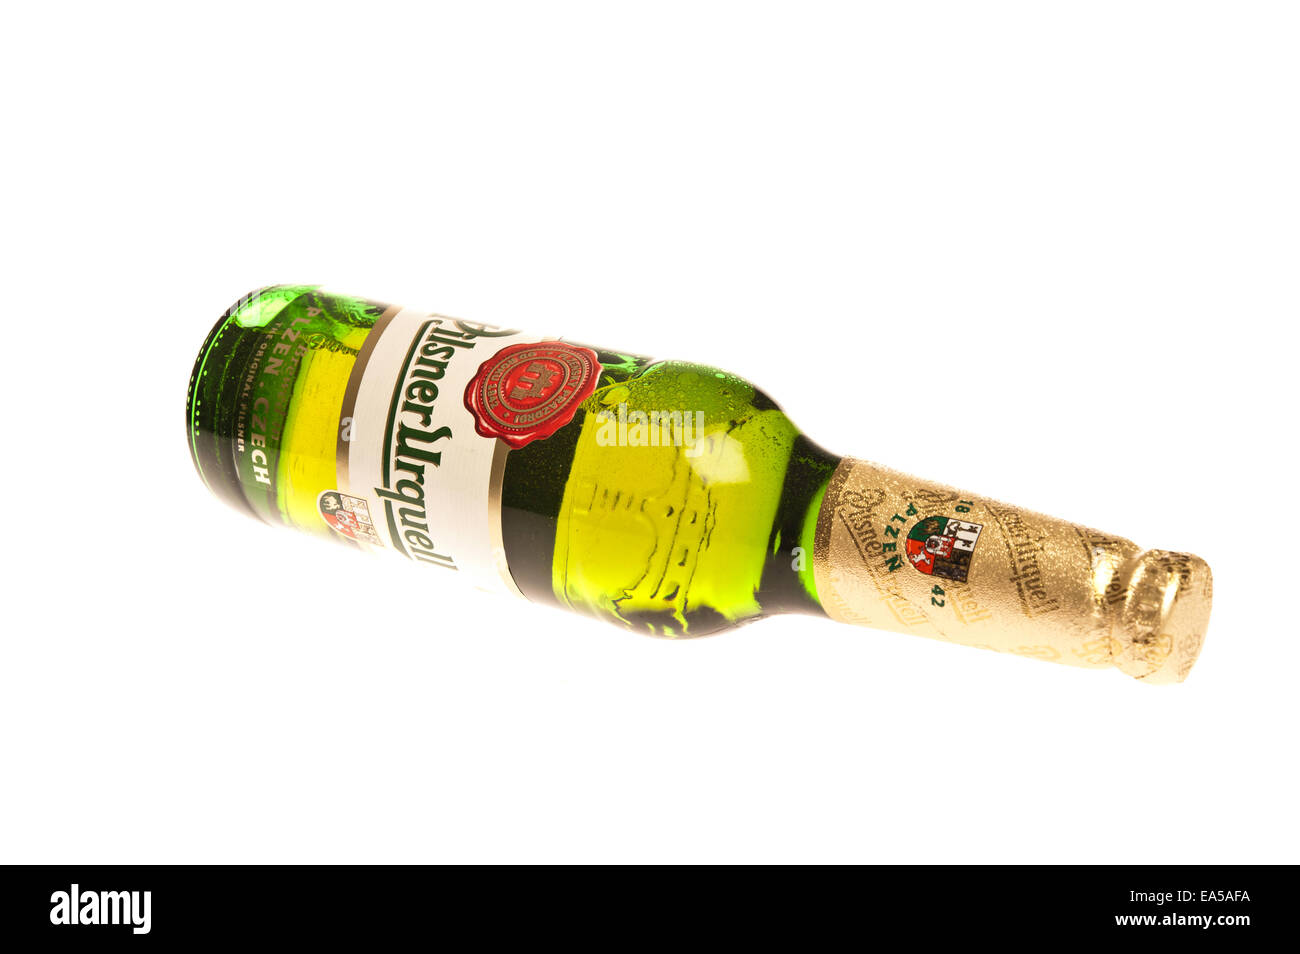 Pilsner beer bottle Stock Photo